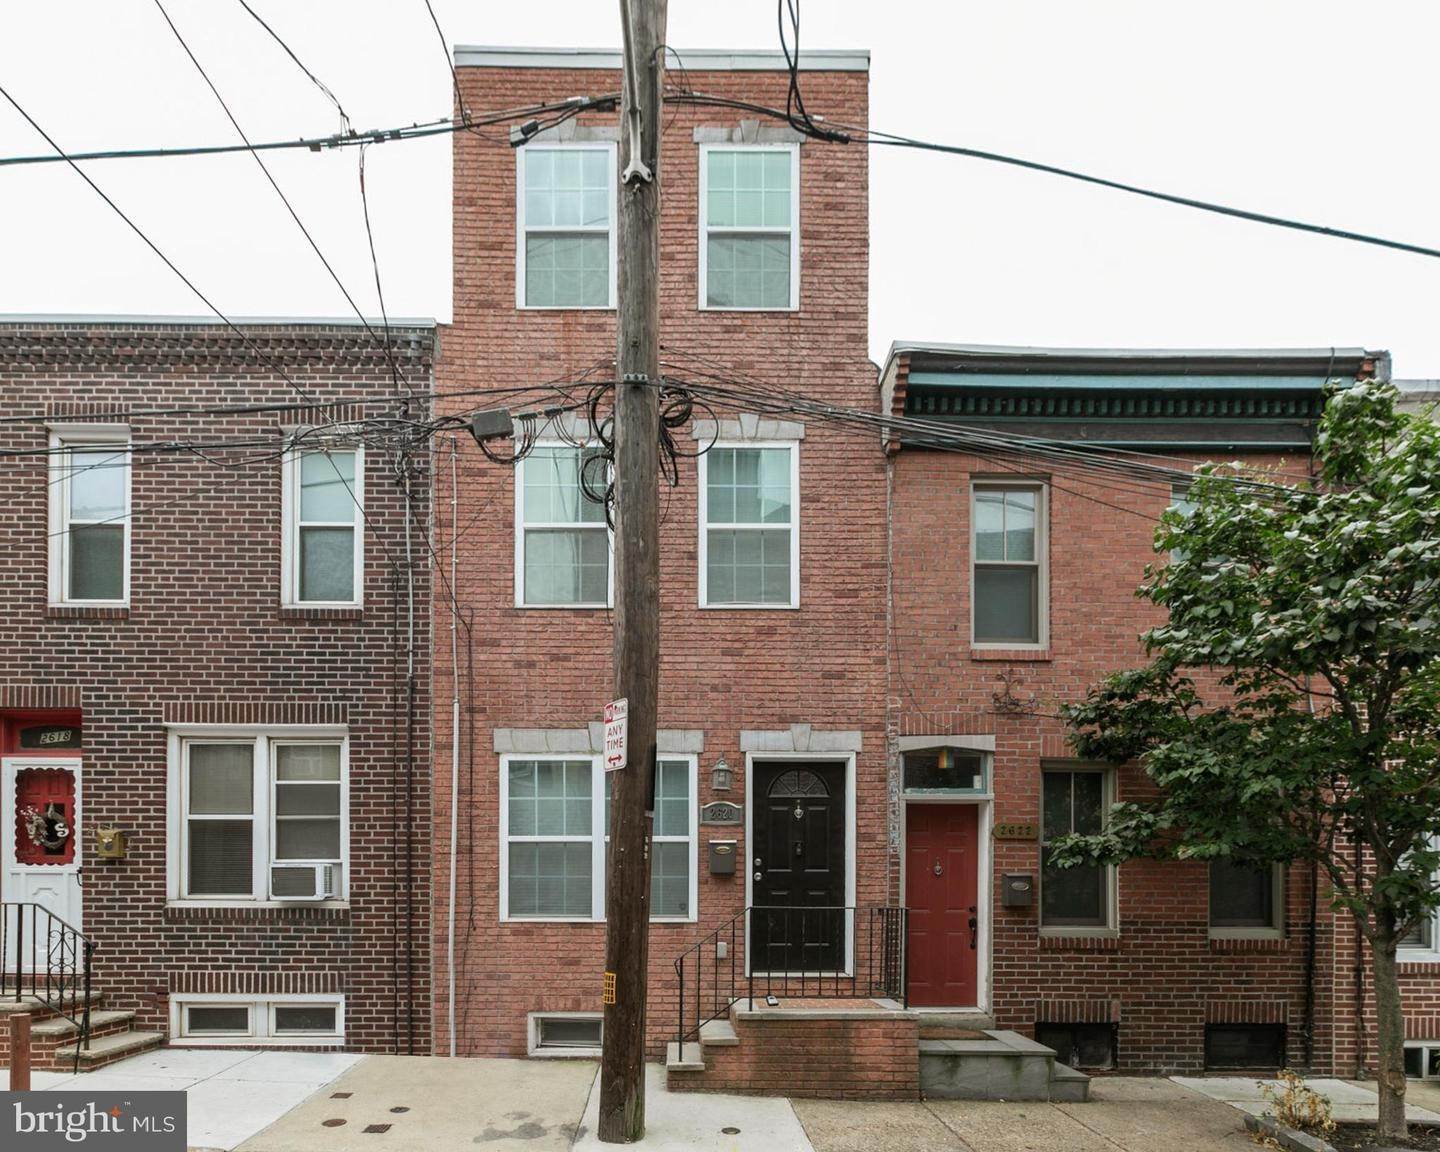 2. Residential for Sale at 2620 CATHARINE Street Philadelphia, Pennsylvania 19146 United States